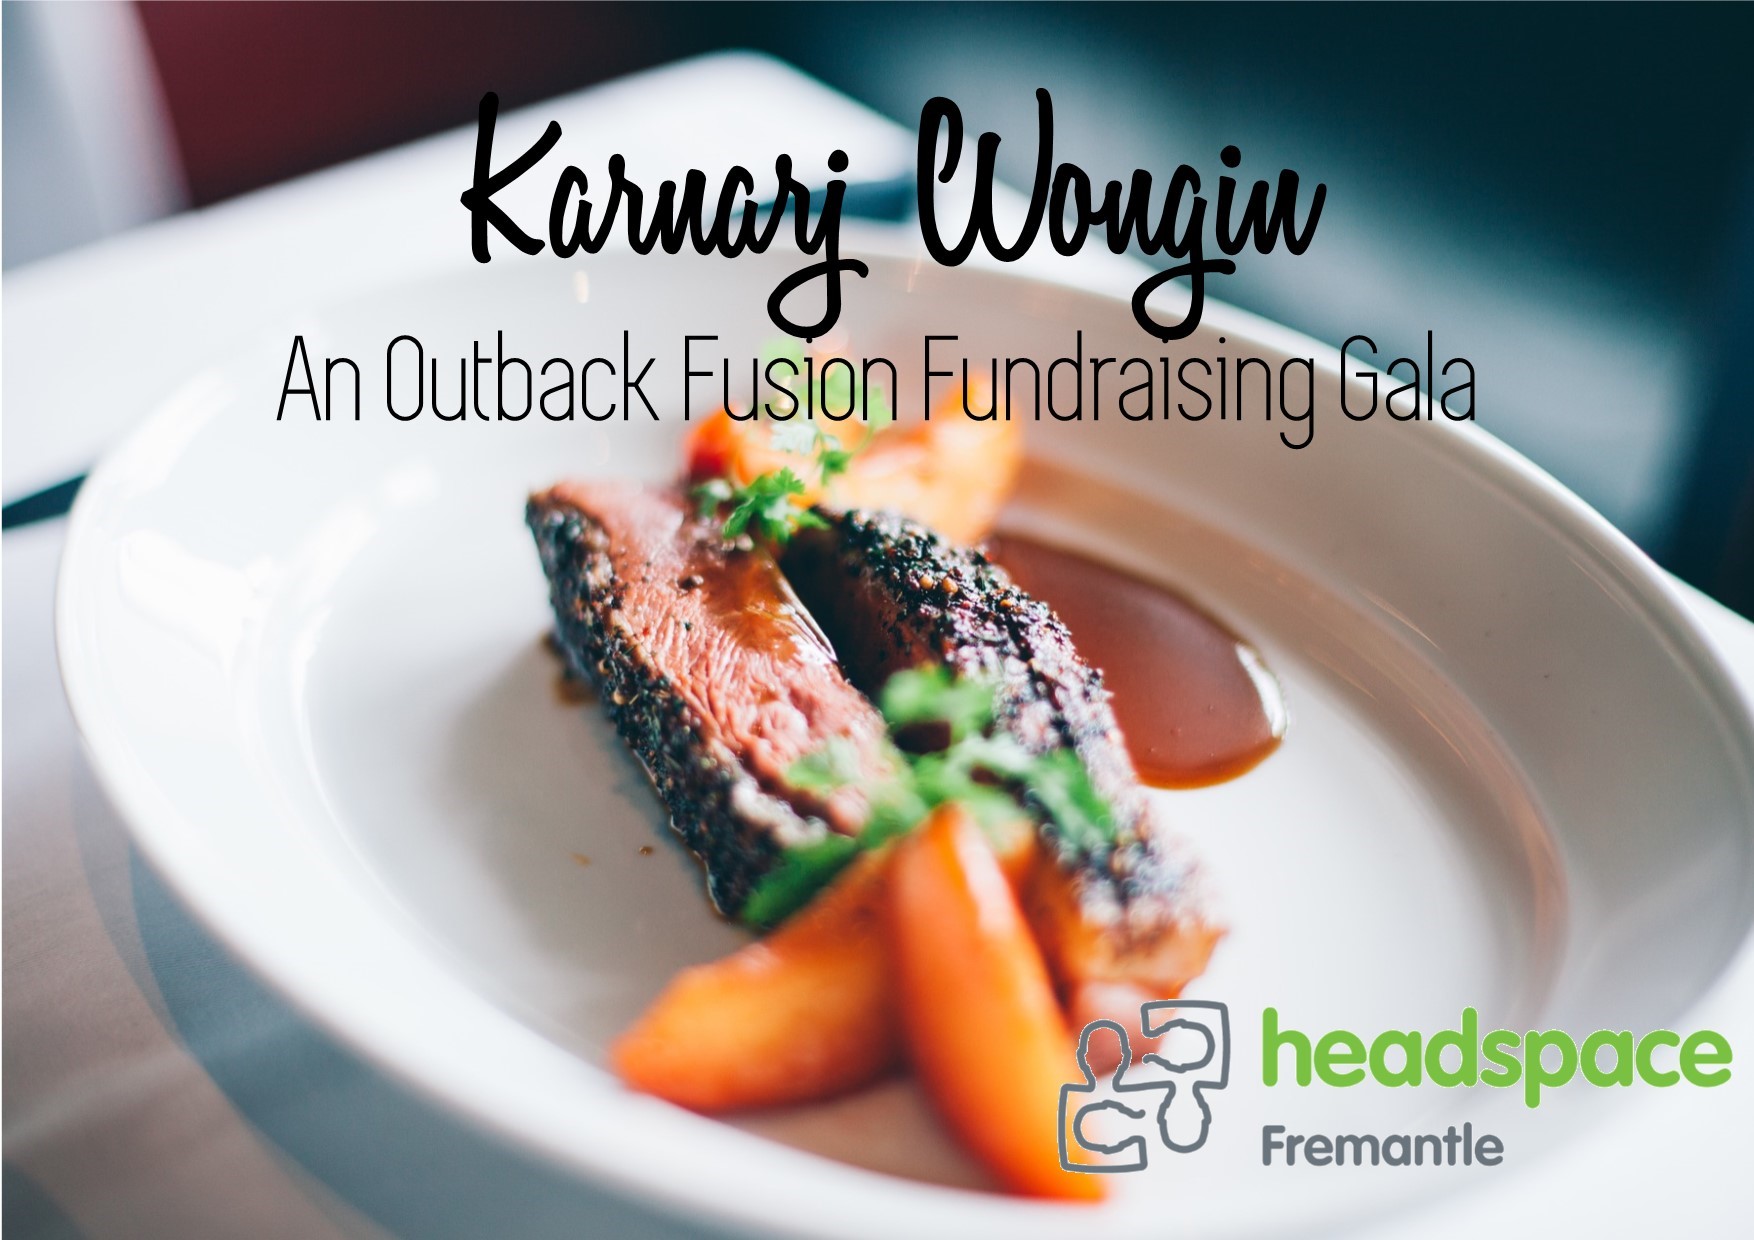 headspace Fremantle presents ‘Karnarj Wongin’ – An Outback Fusion Fundraising Gala